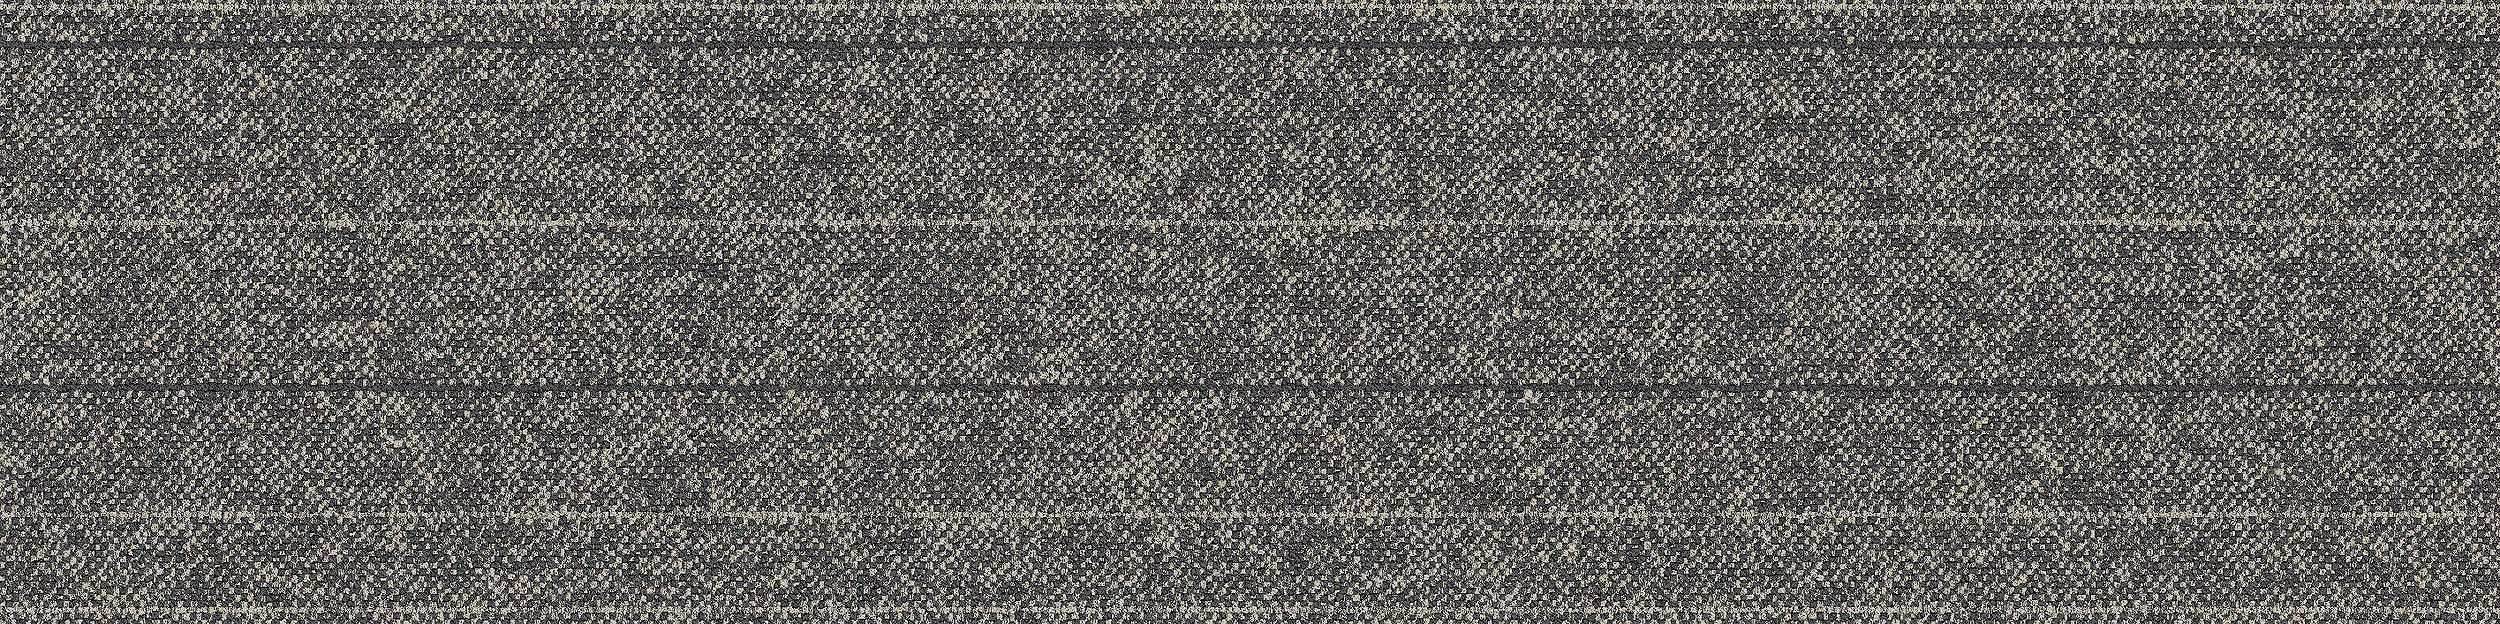 WW860 Carpet Tile In Charcoal Tweed image number 13